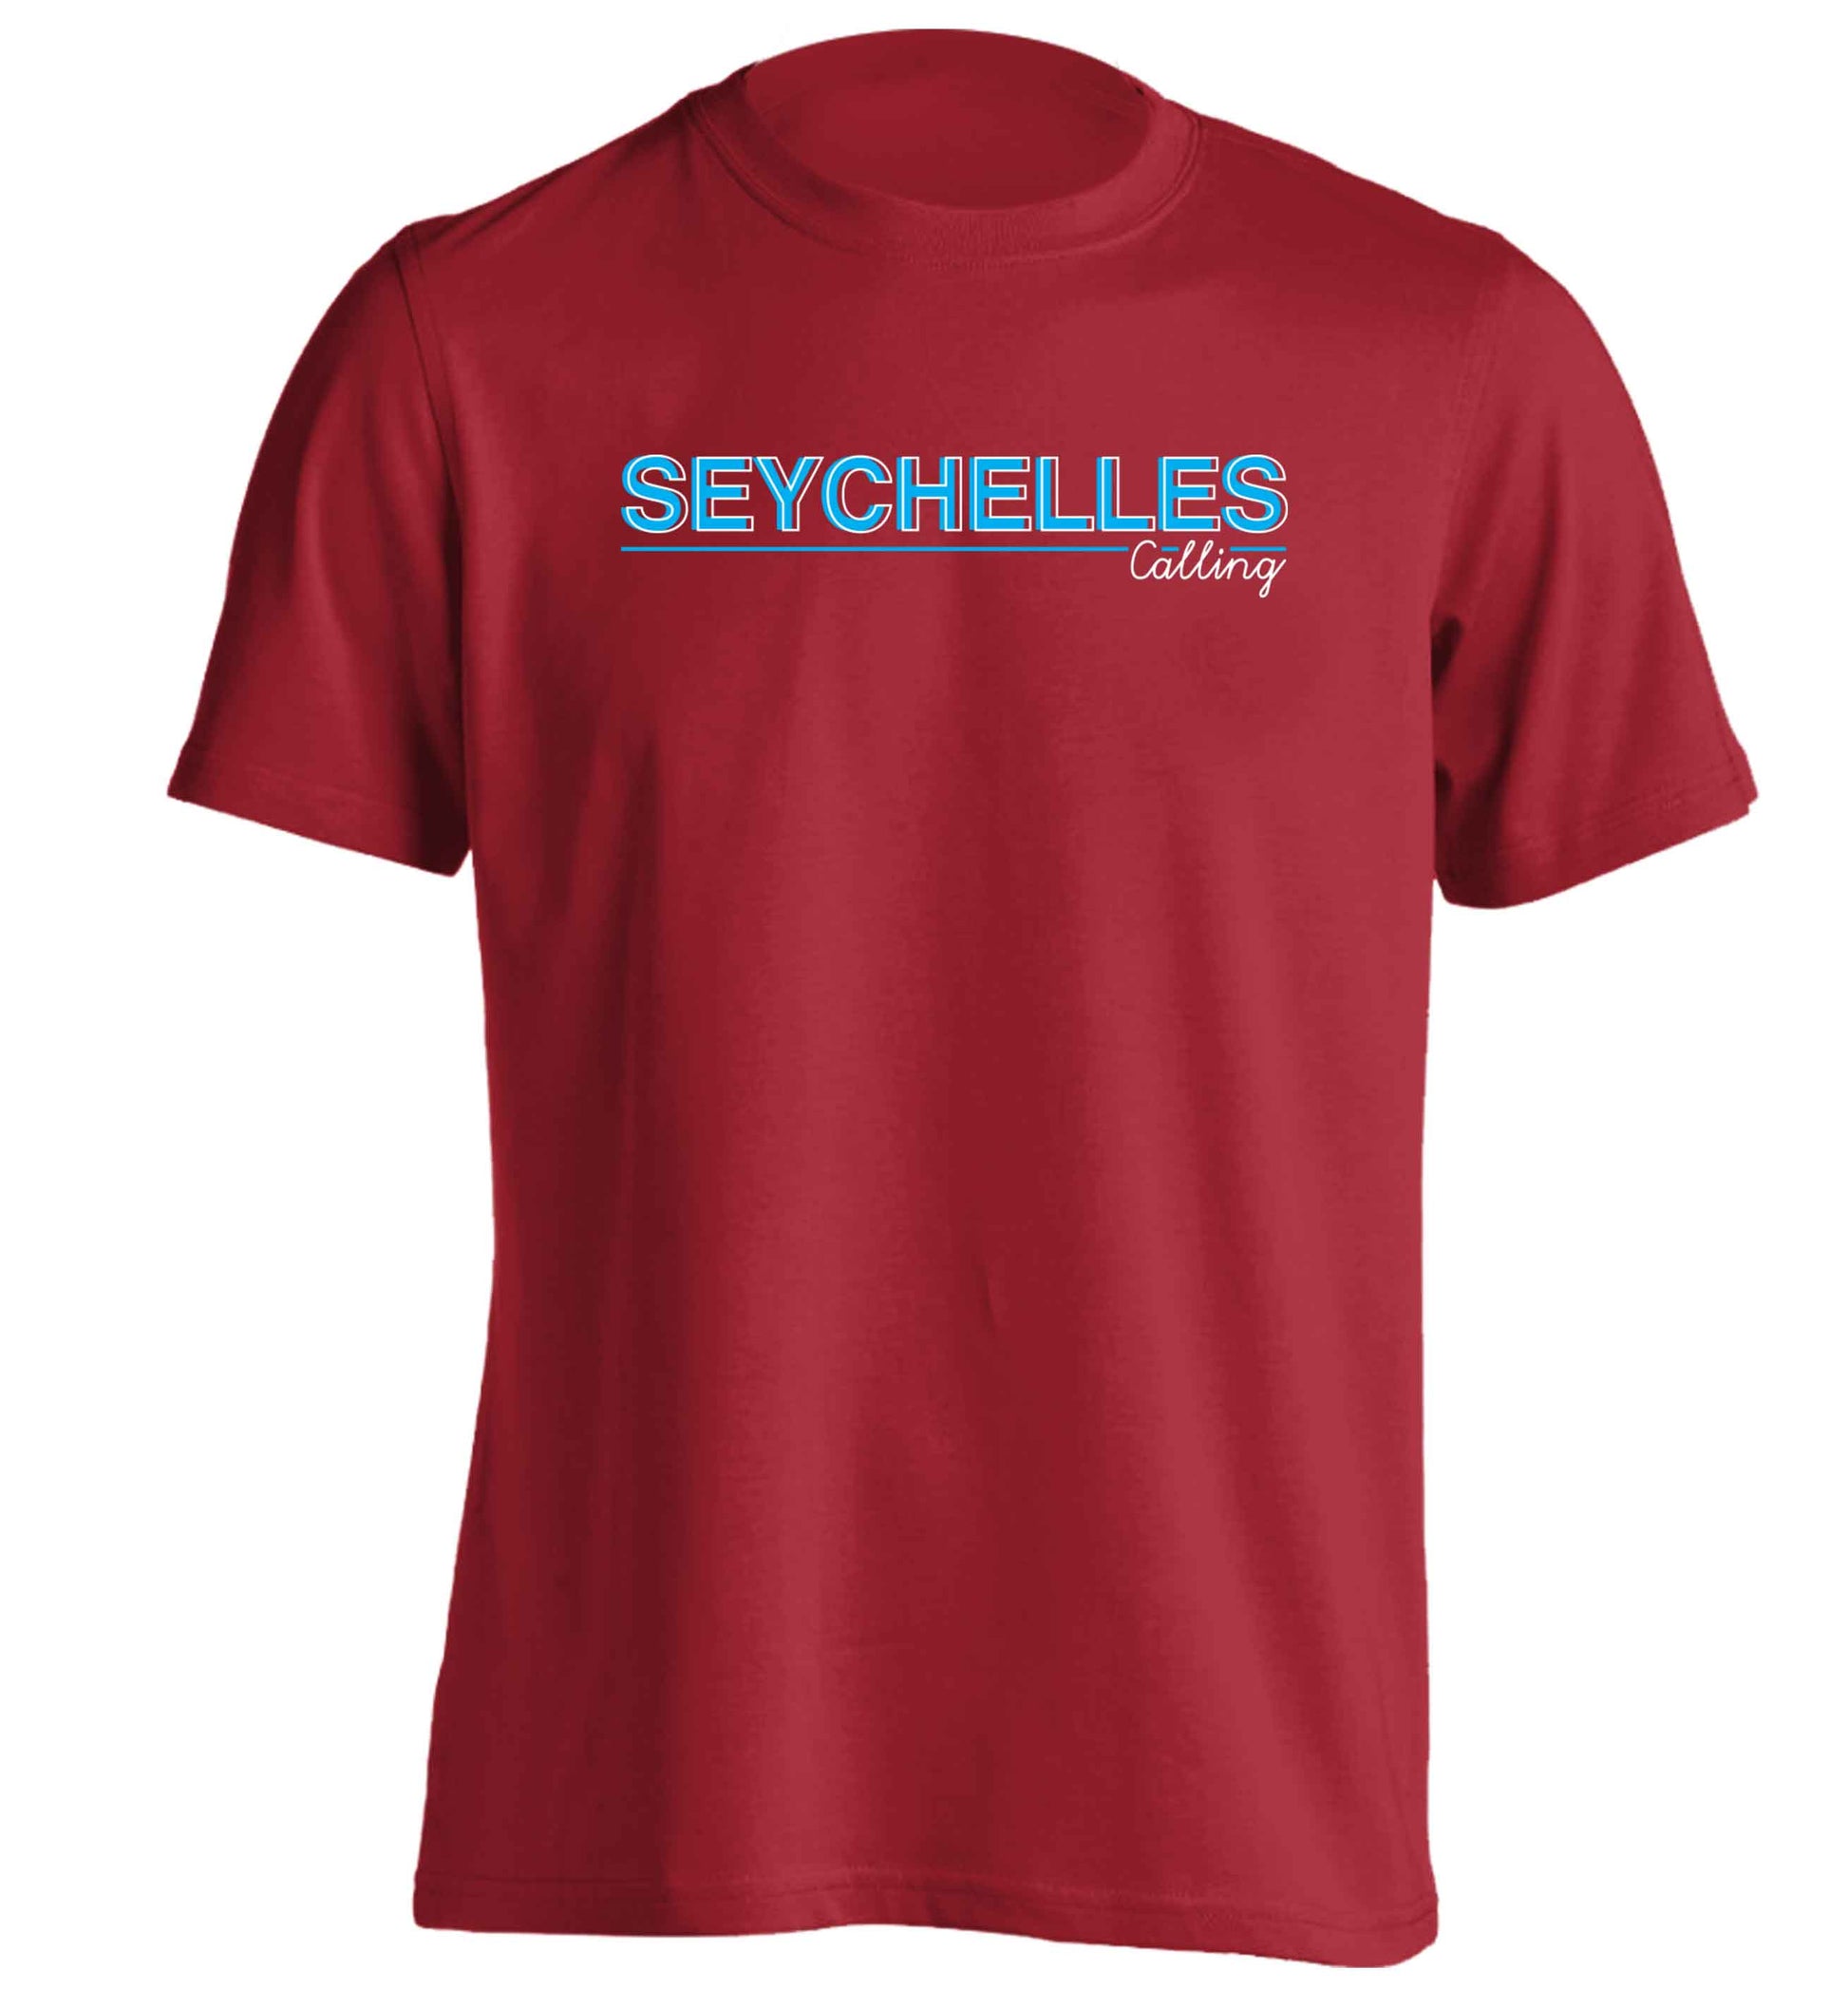 Seychelles calling adults unisex red Tshirt 2XL